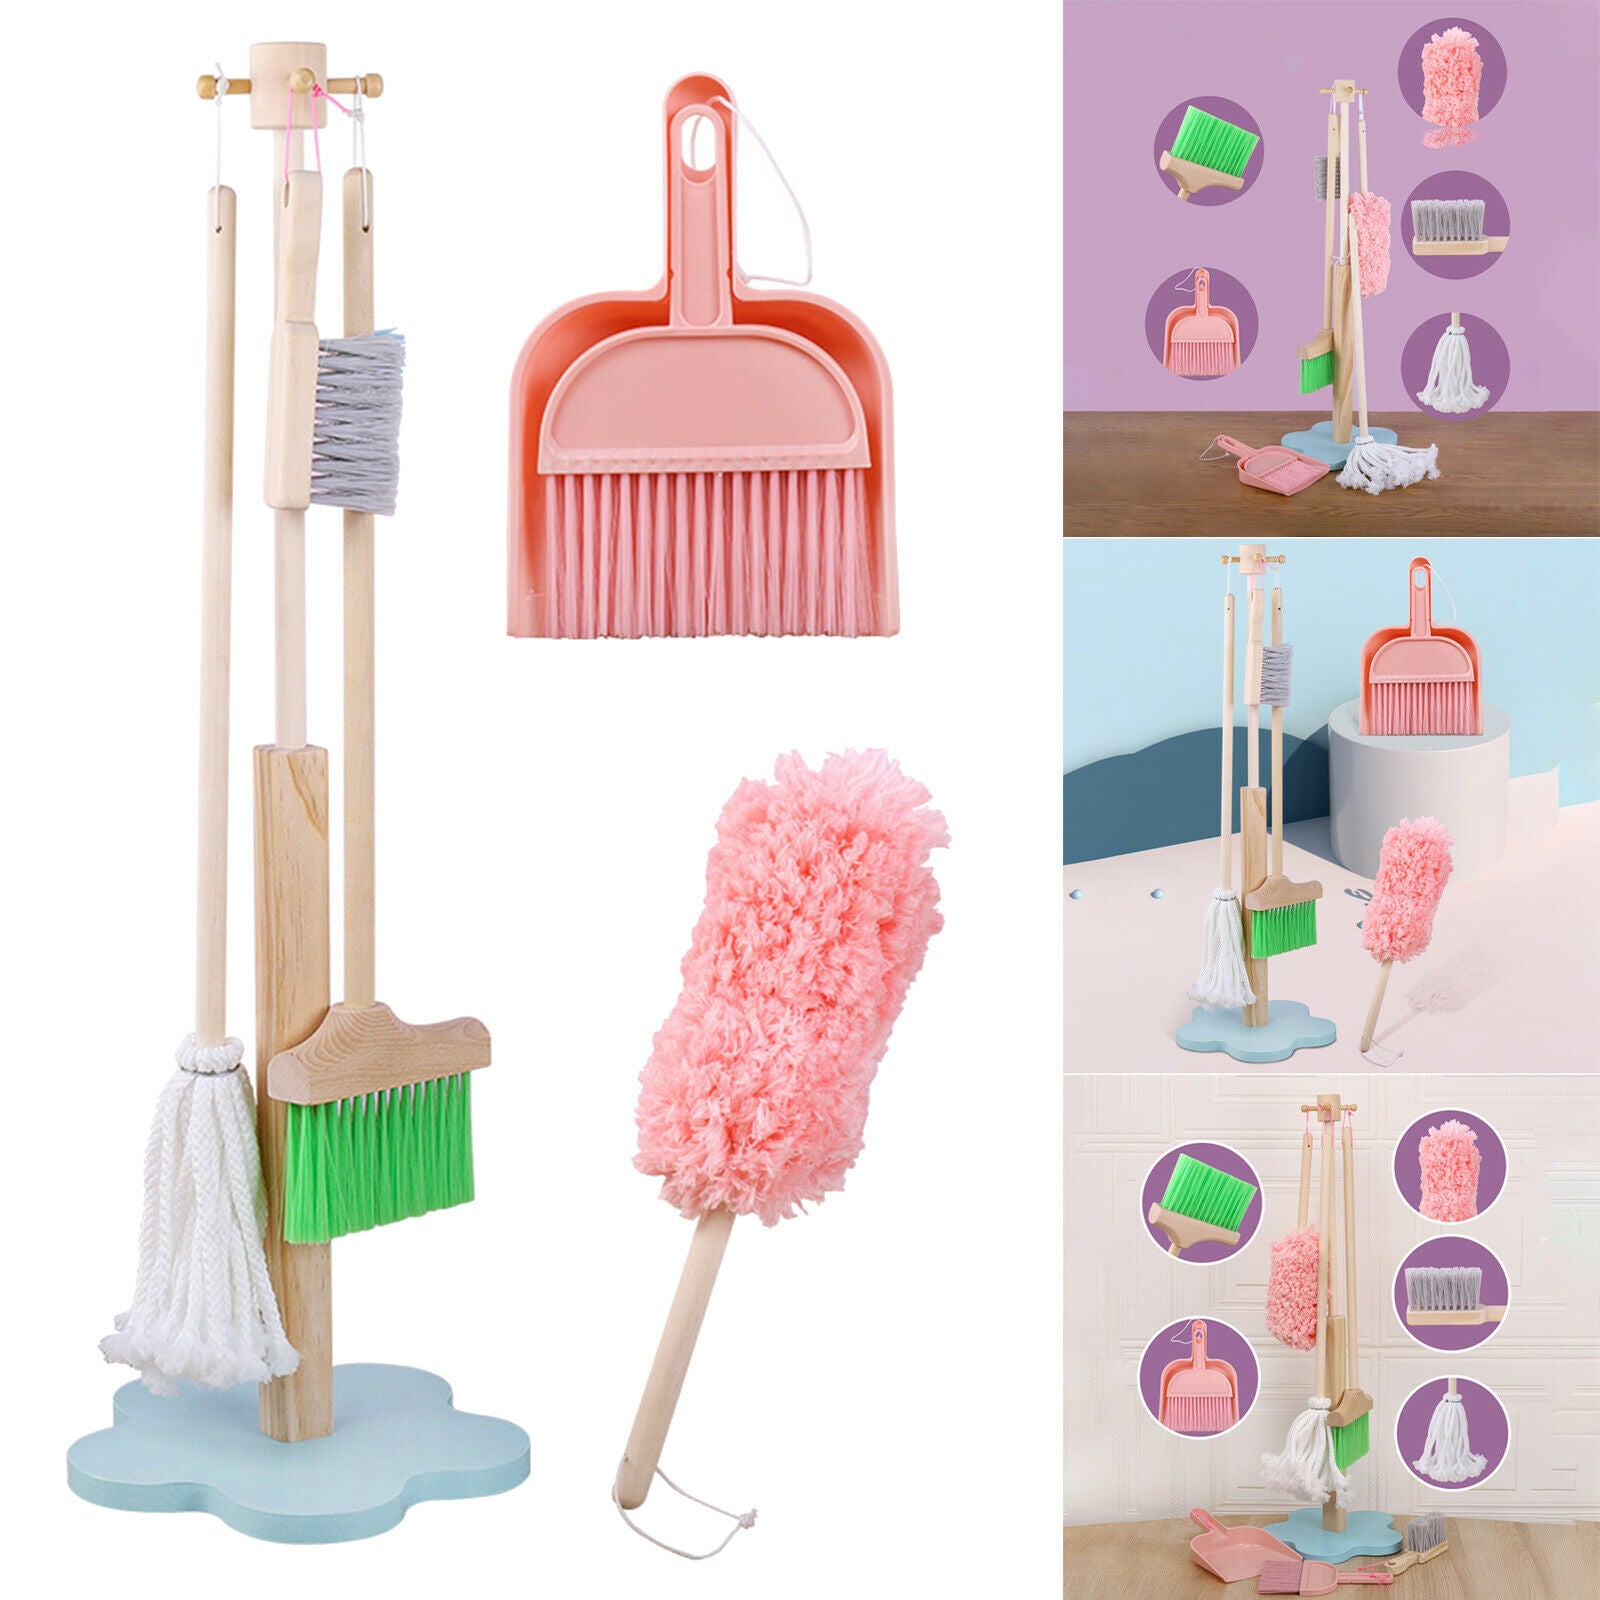 Wooden Children Cleaning Tools Set Mini Broom Mop Dustpan for Kids Housework